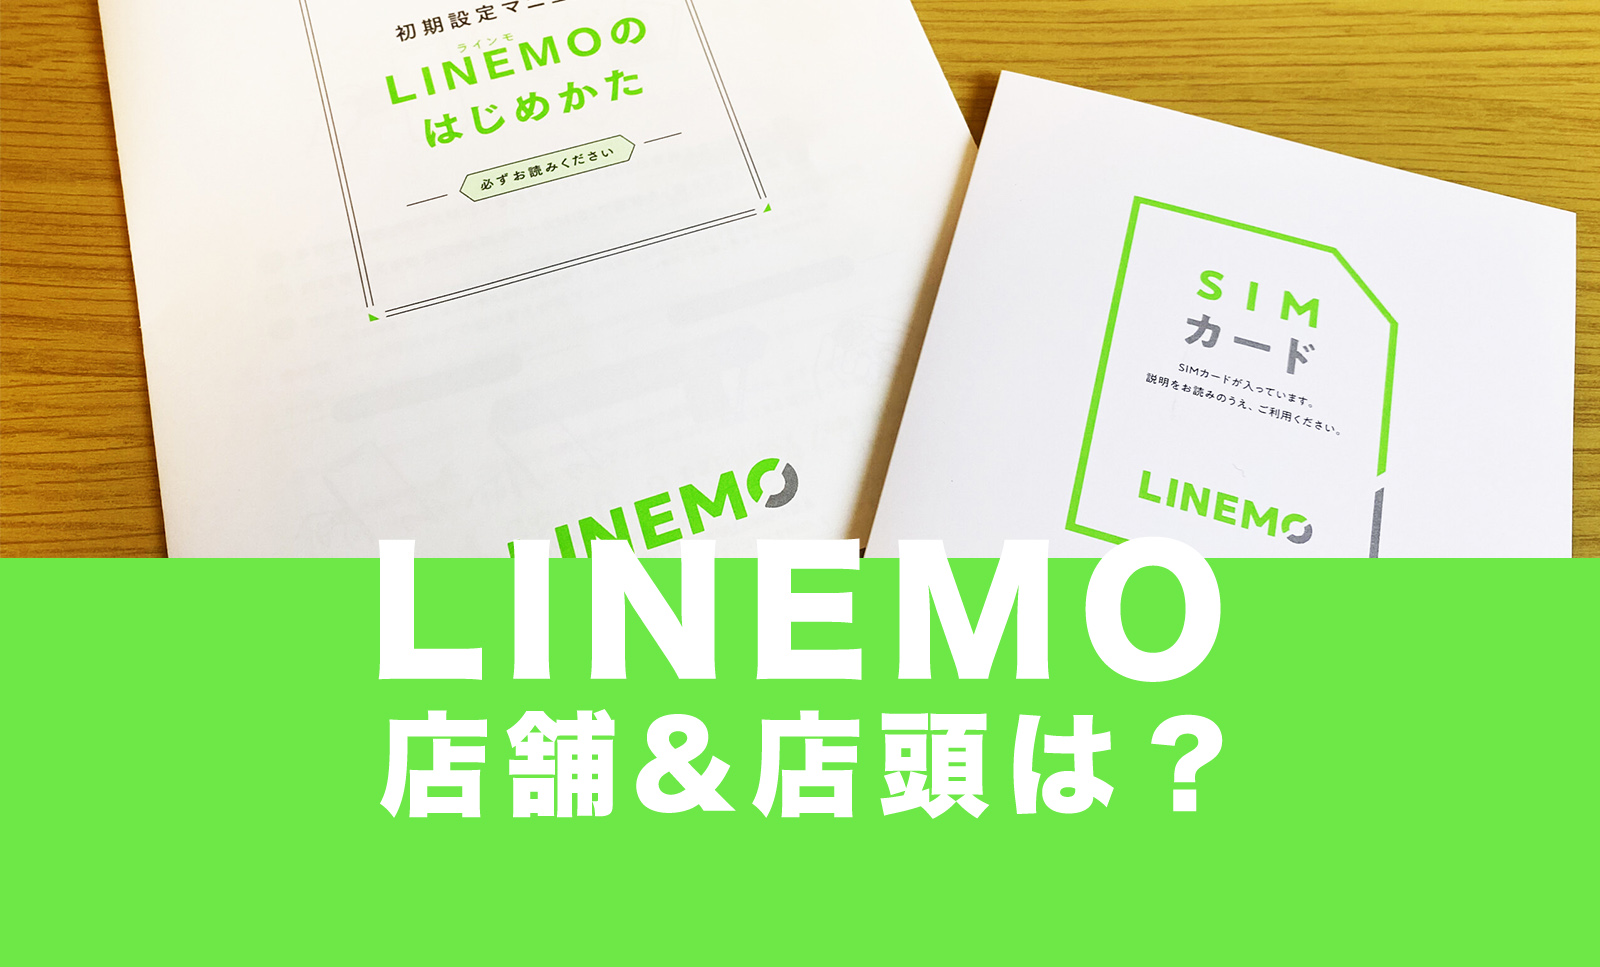 LINEMO(ラインモ)は店舗なく東京も0店舗、店頭ショップでの契約サポートは提供されないのサムネイル画像